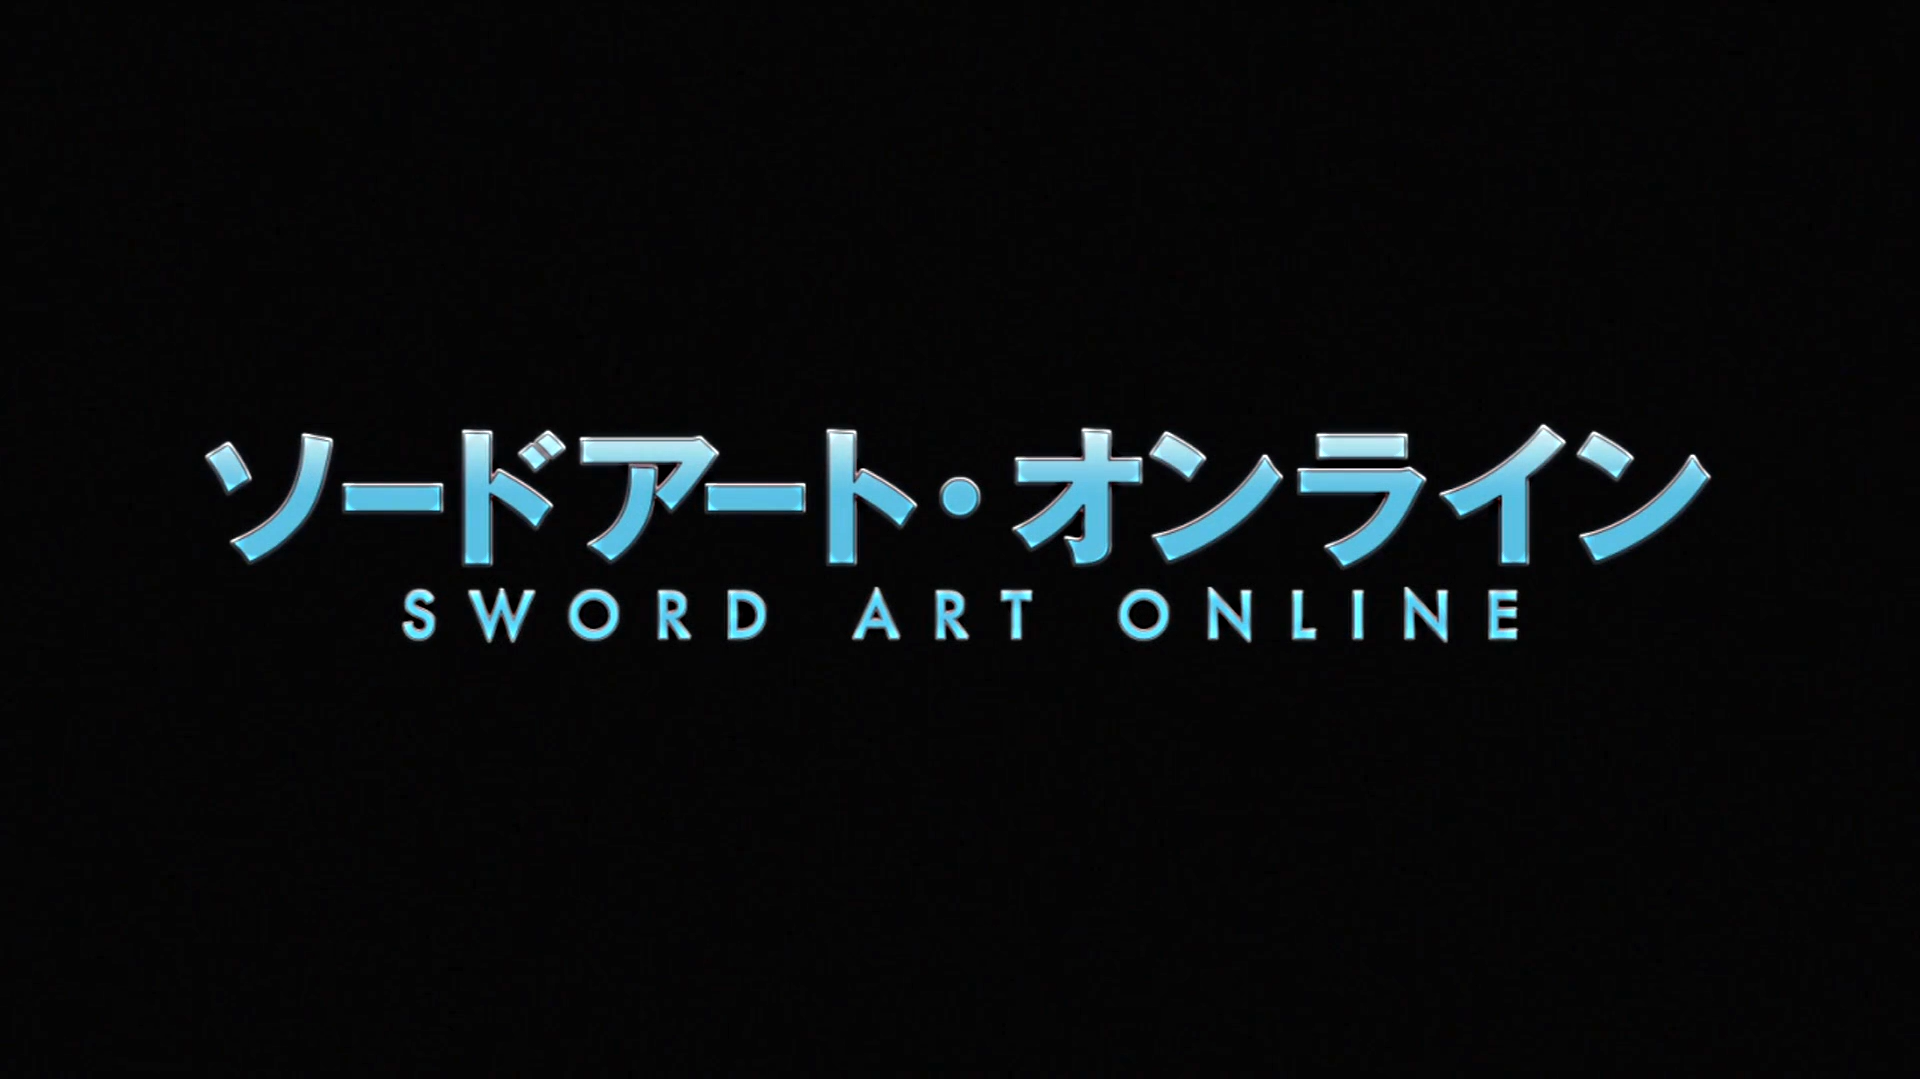 Sword Art Online GdR - An INCarnating RADius